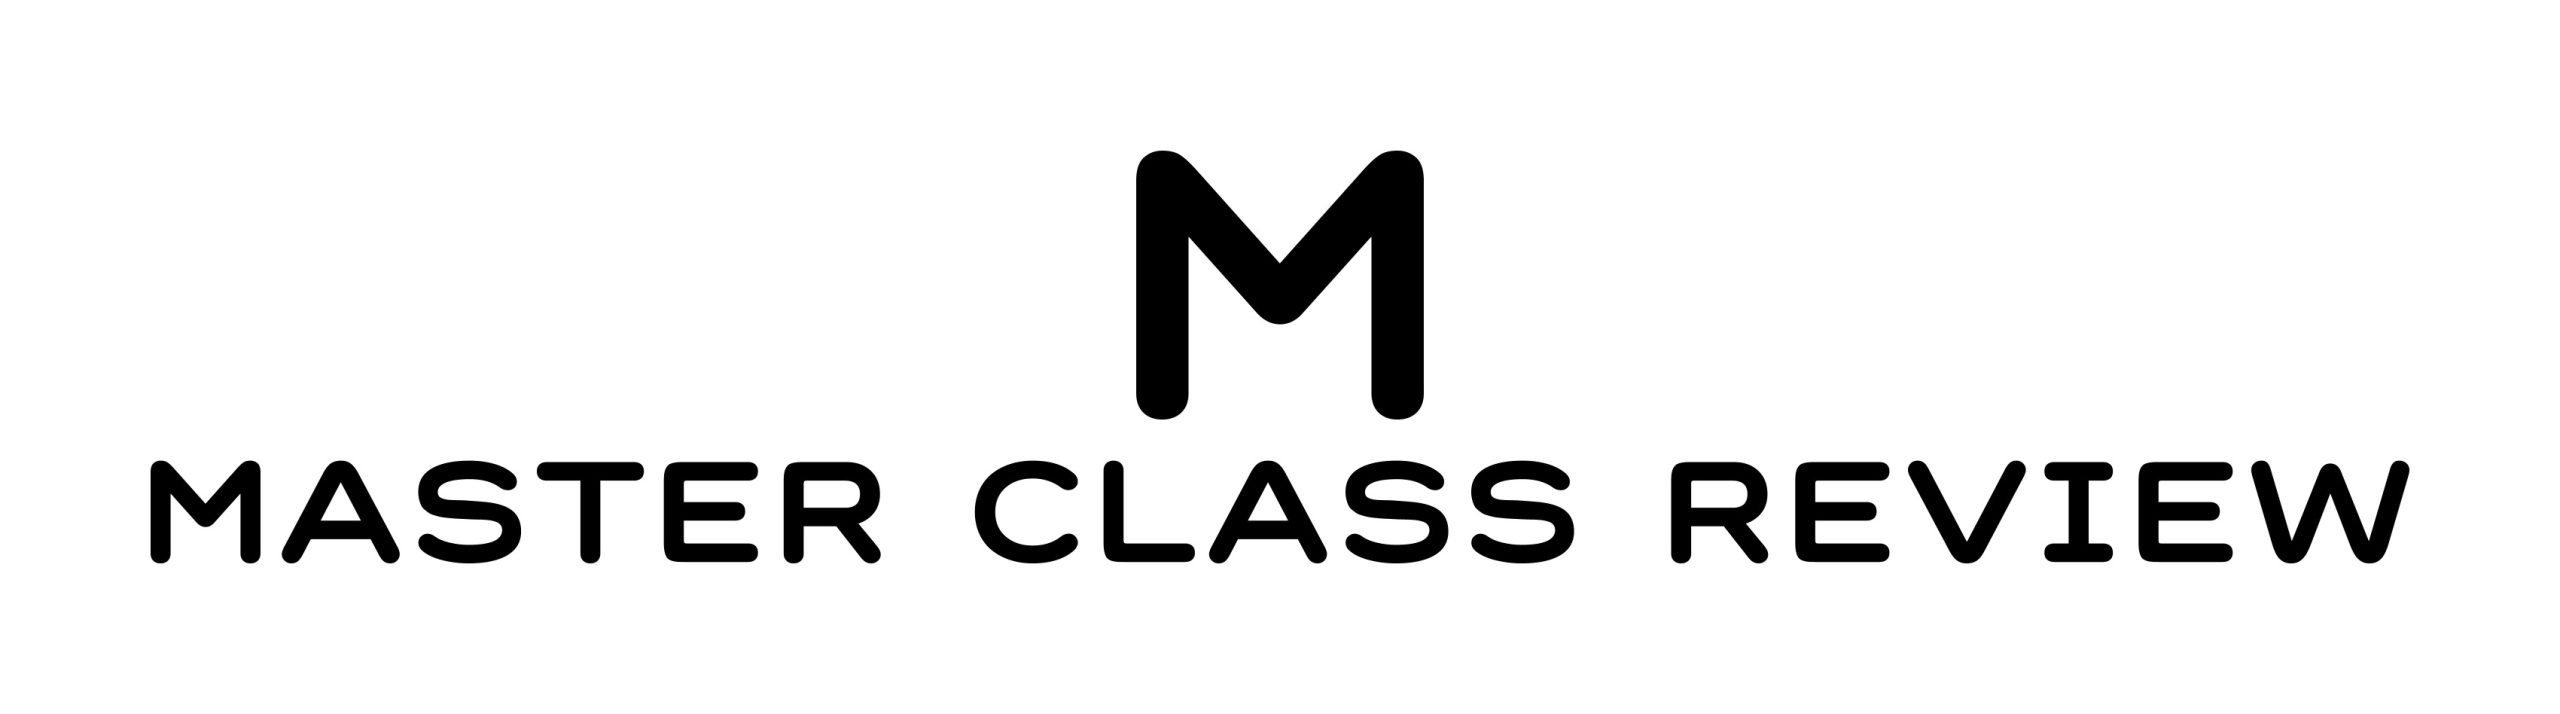 Master Class Review Logo